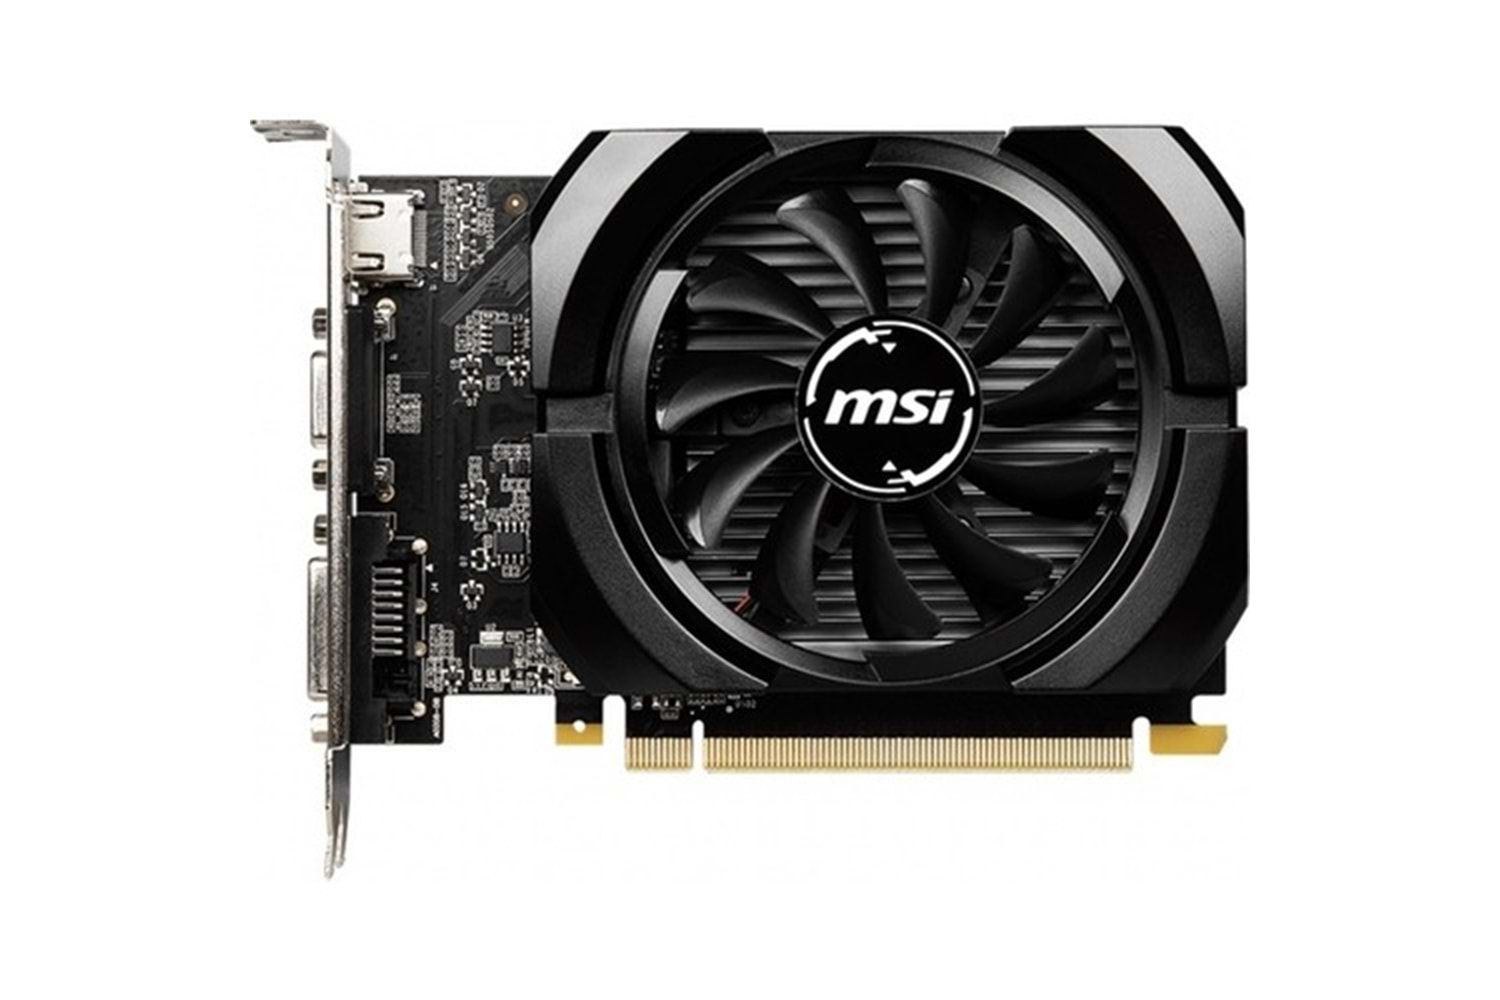 Msi GeForce GT 730 N730K-4GD3/OC 4GB DDR3 64Bit DX12 Gaming (Oyuncu) Ekran Kartı